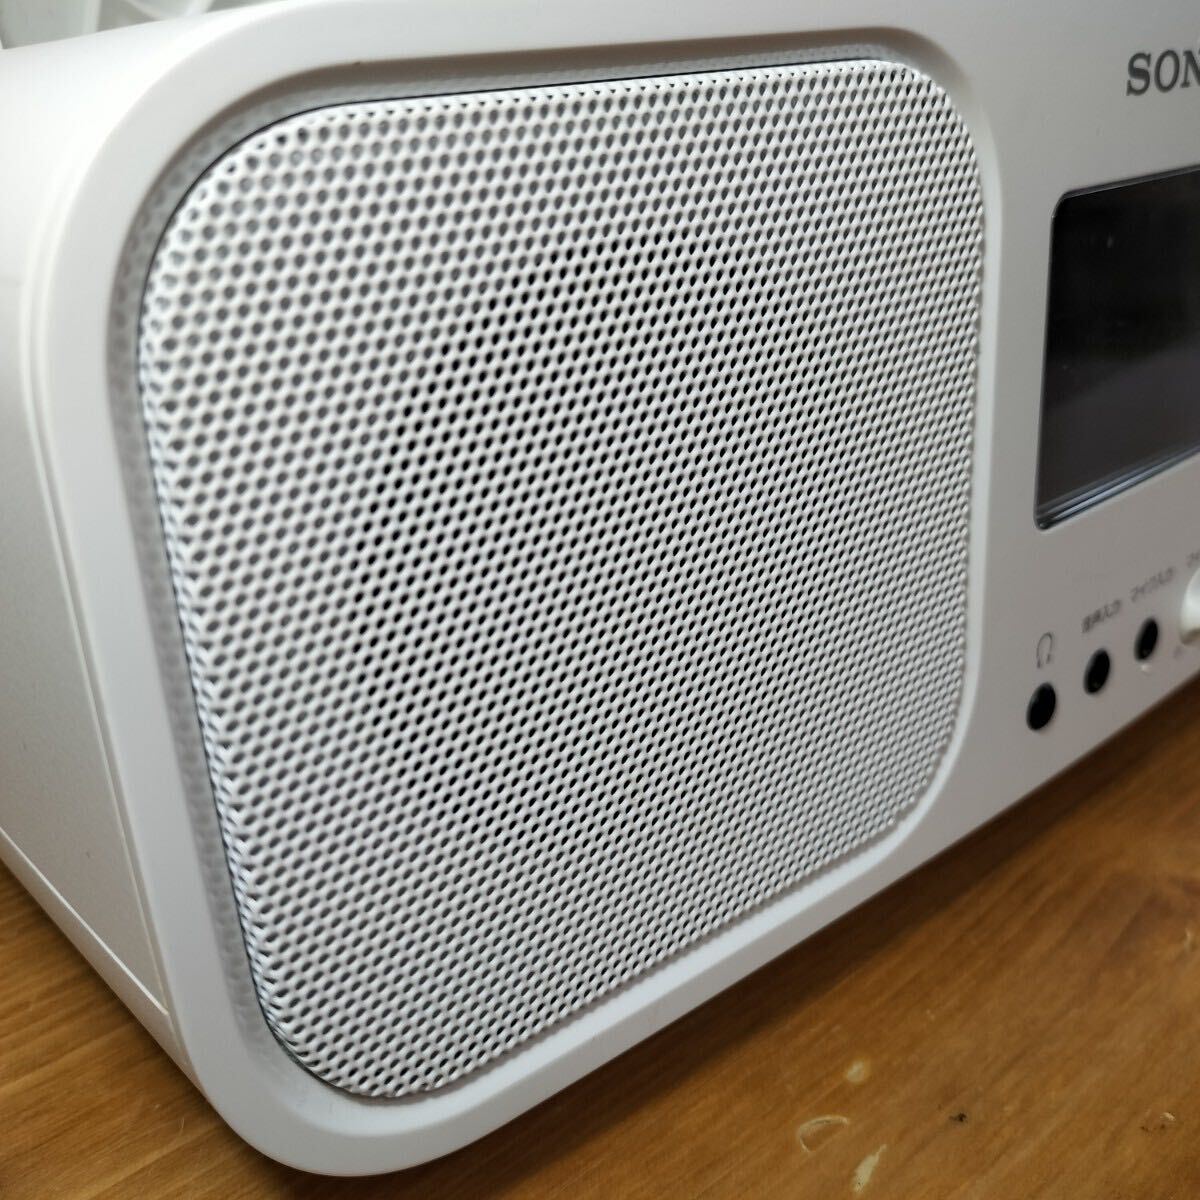 5-18 SONY Sony CD radio-cassette radio-cassette CD radio personal audio system white CFD-S401